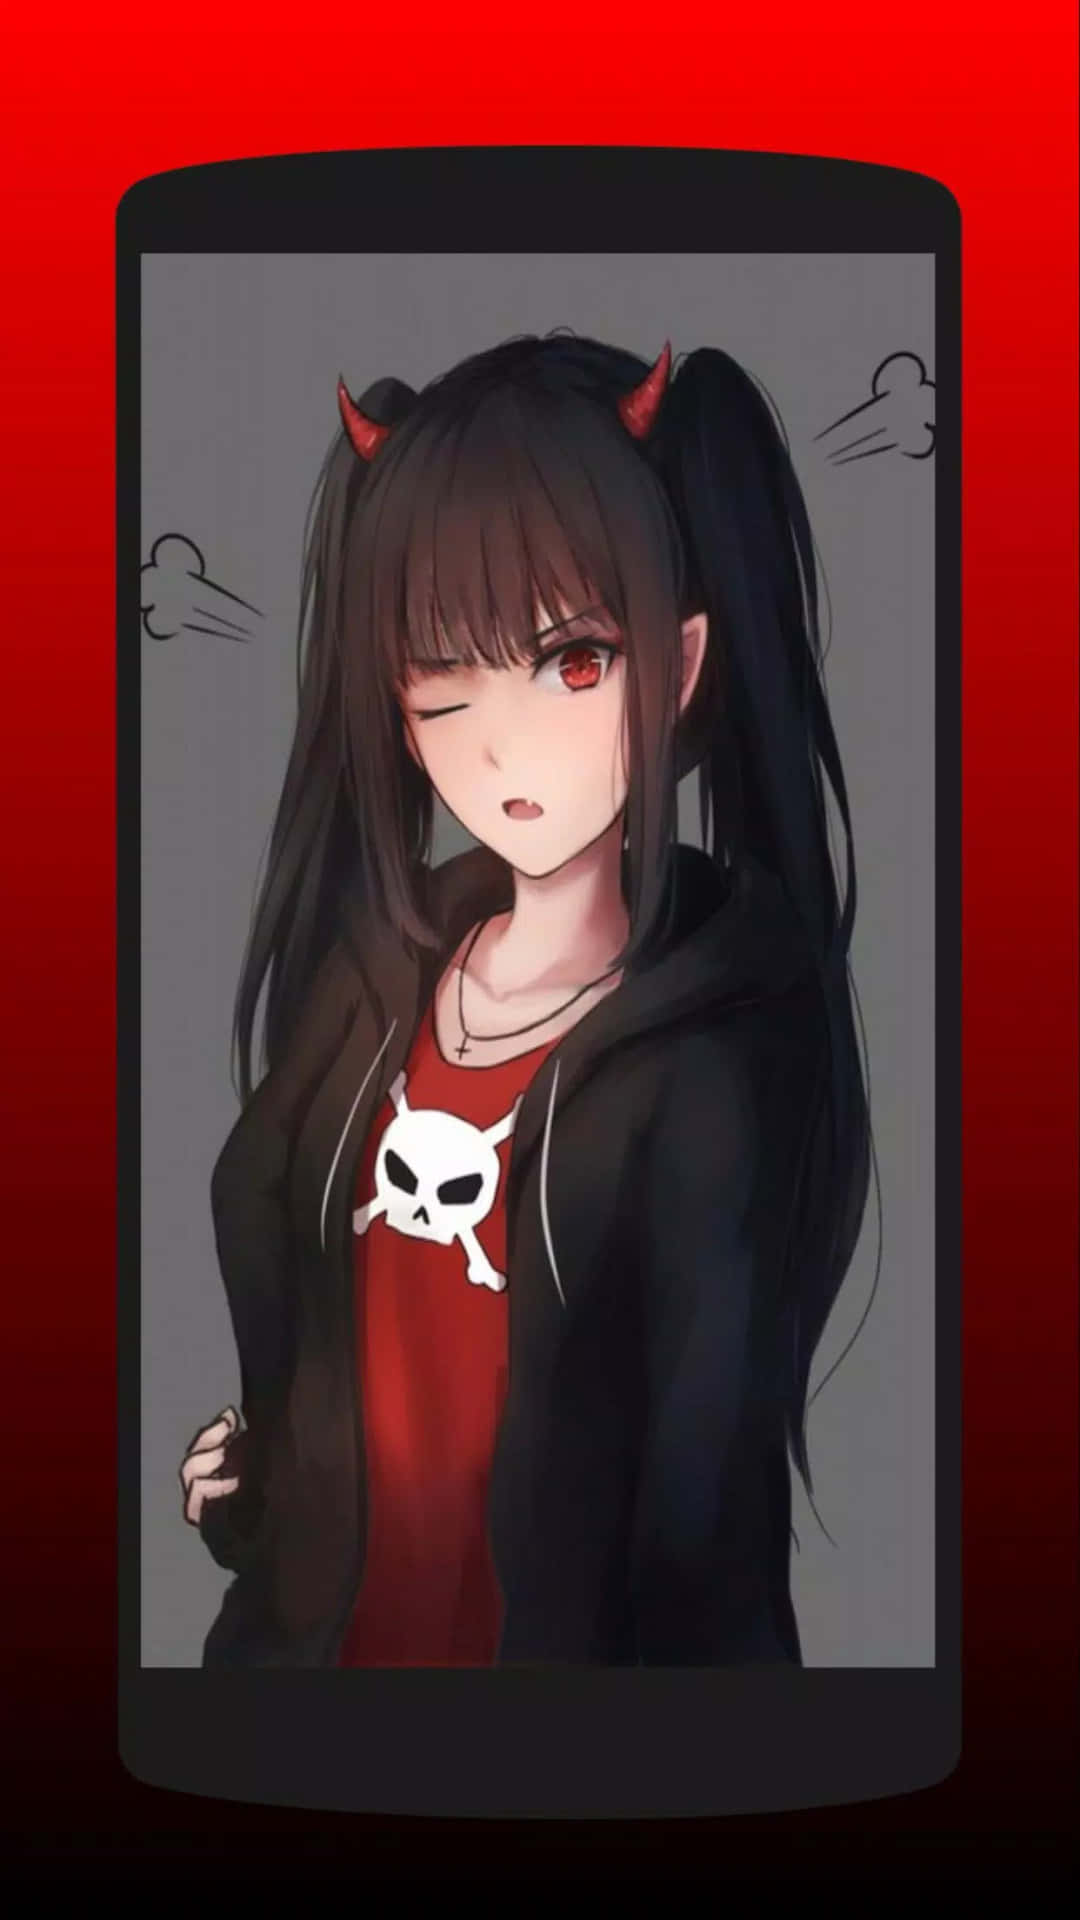 Cute Devil Girl with Tempting Look Wallpaper